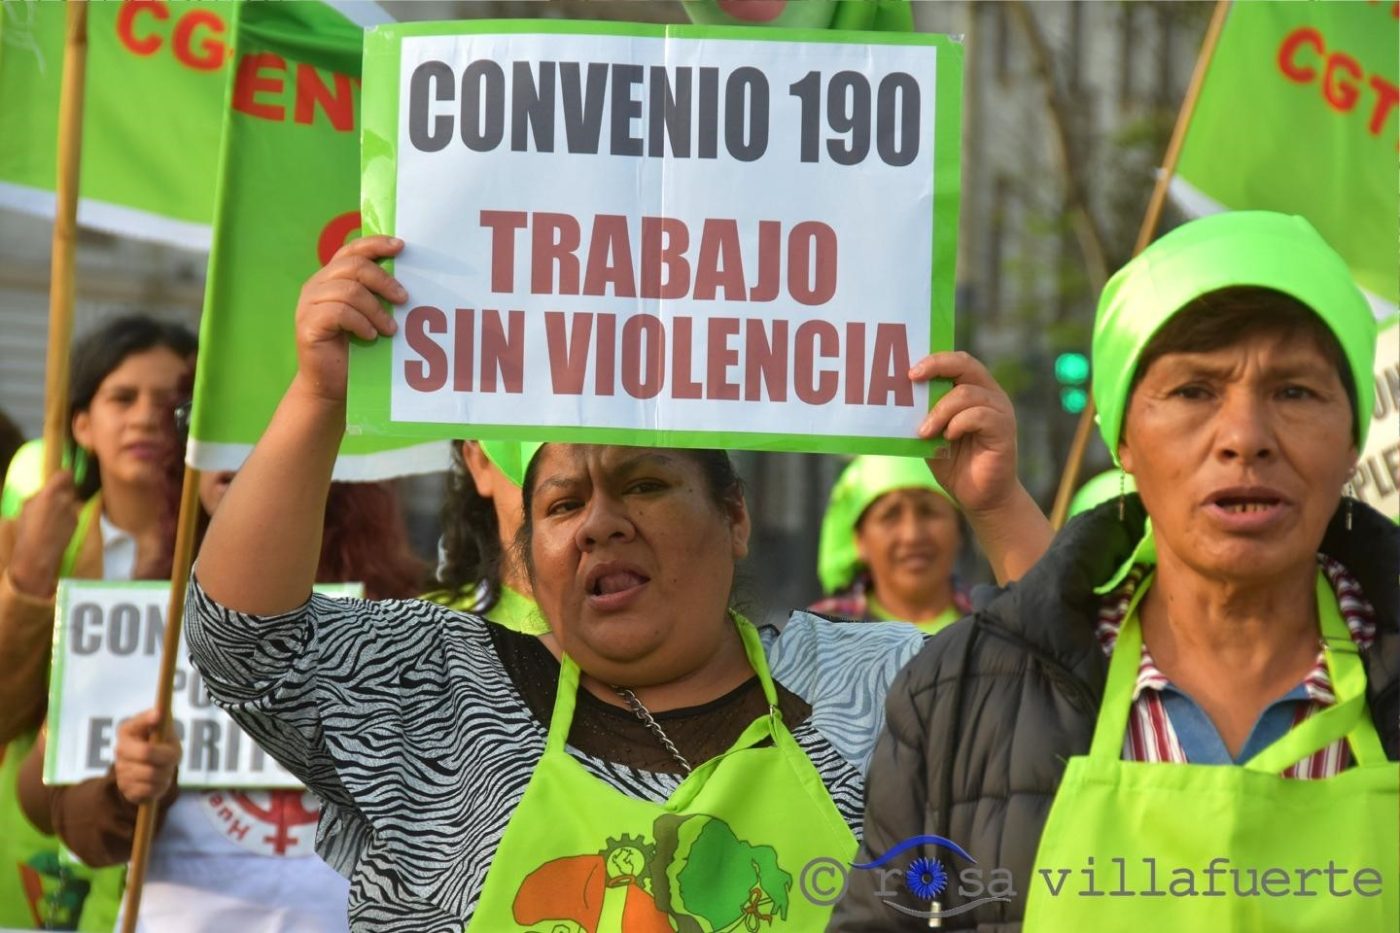 (Foto Convenio 190 Trabajo sin violencia. Fotógrafa: Rosa Villafuerte)